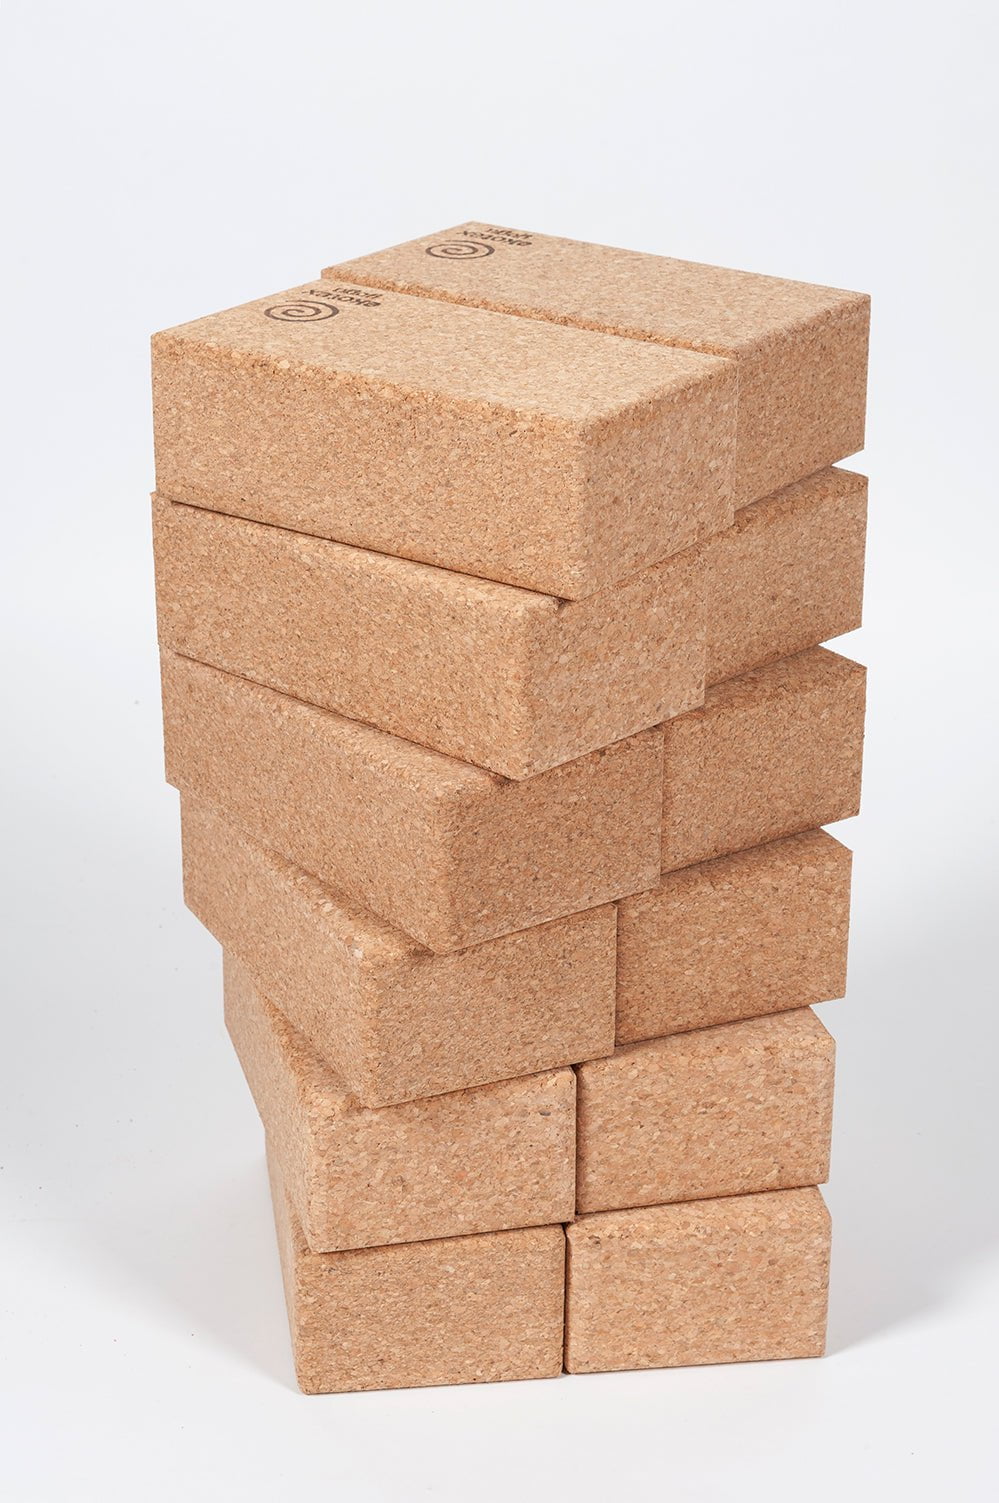 Cork Block